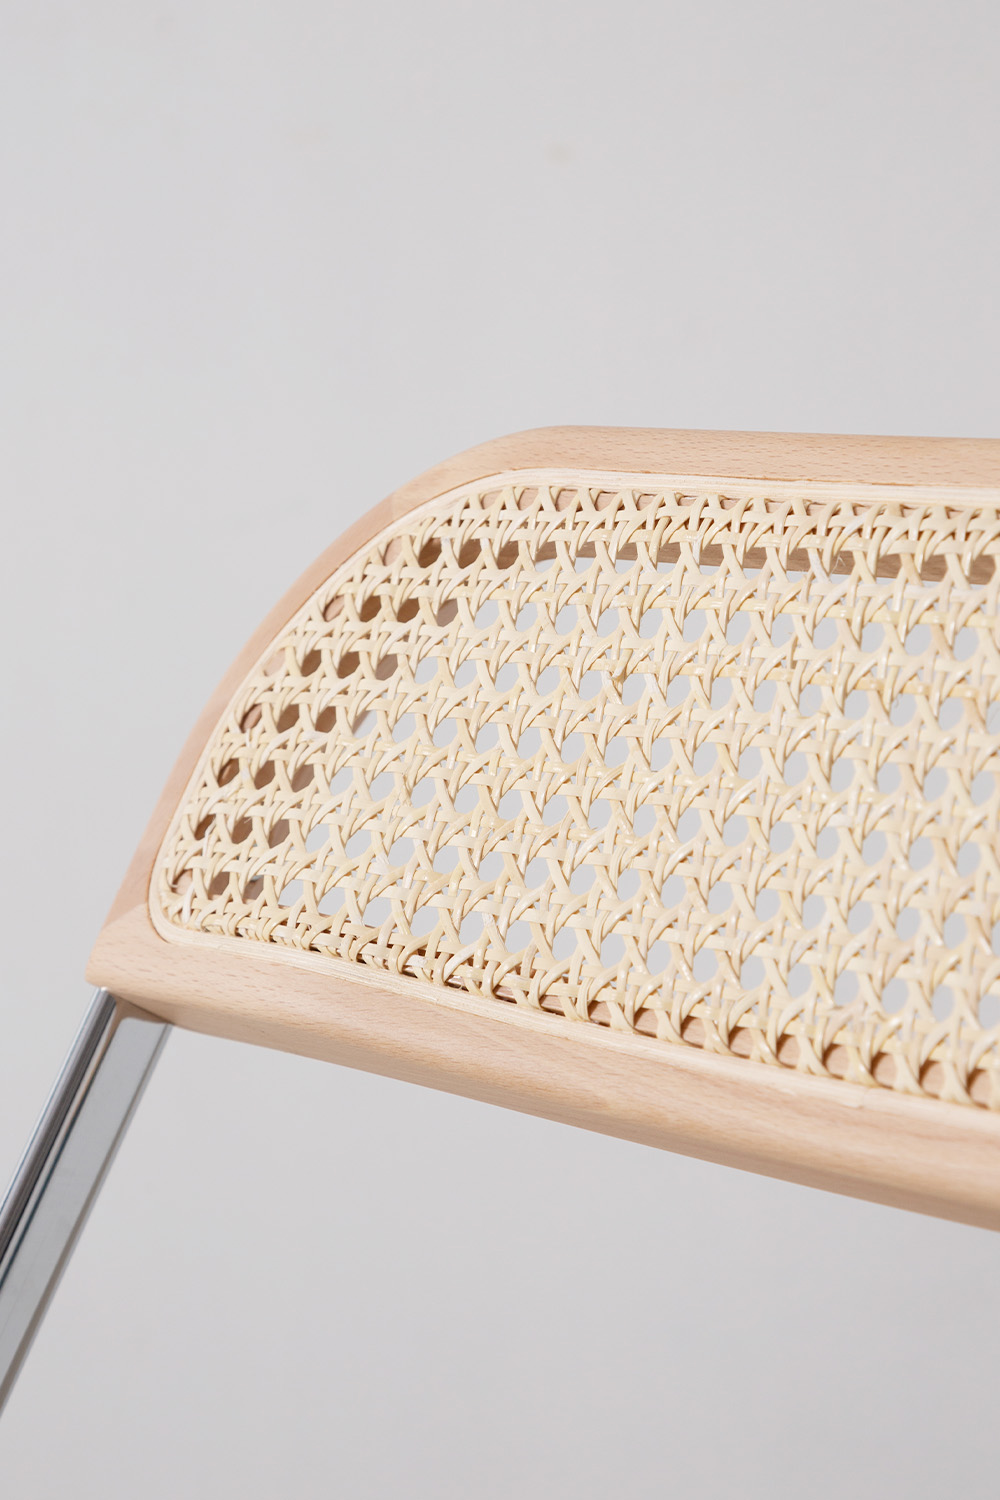 Plia Chair by Giancarlo Piretti for ANONIMA CASTELLI in Steel and Rattan